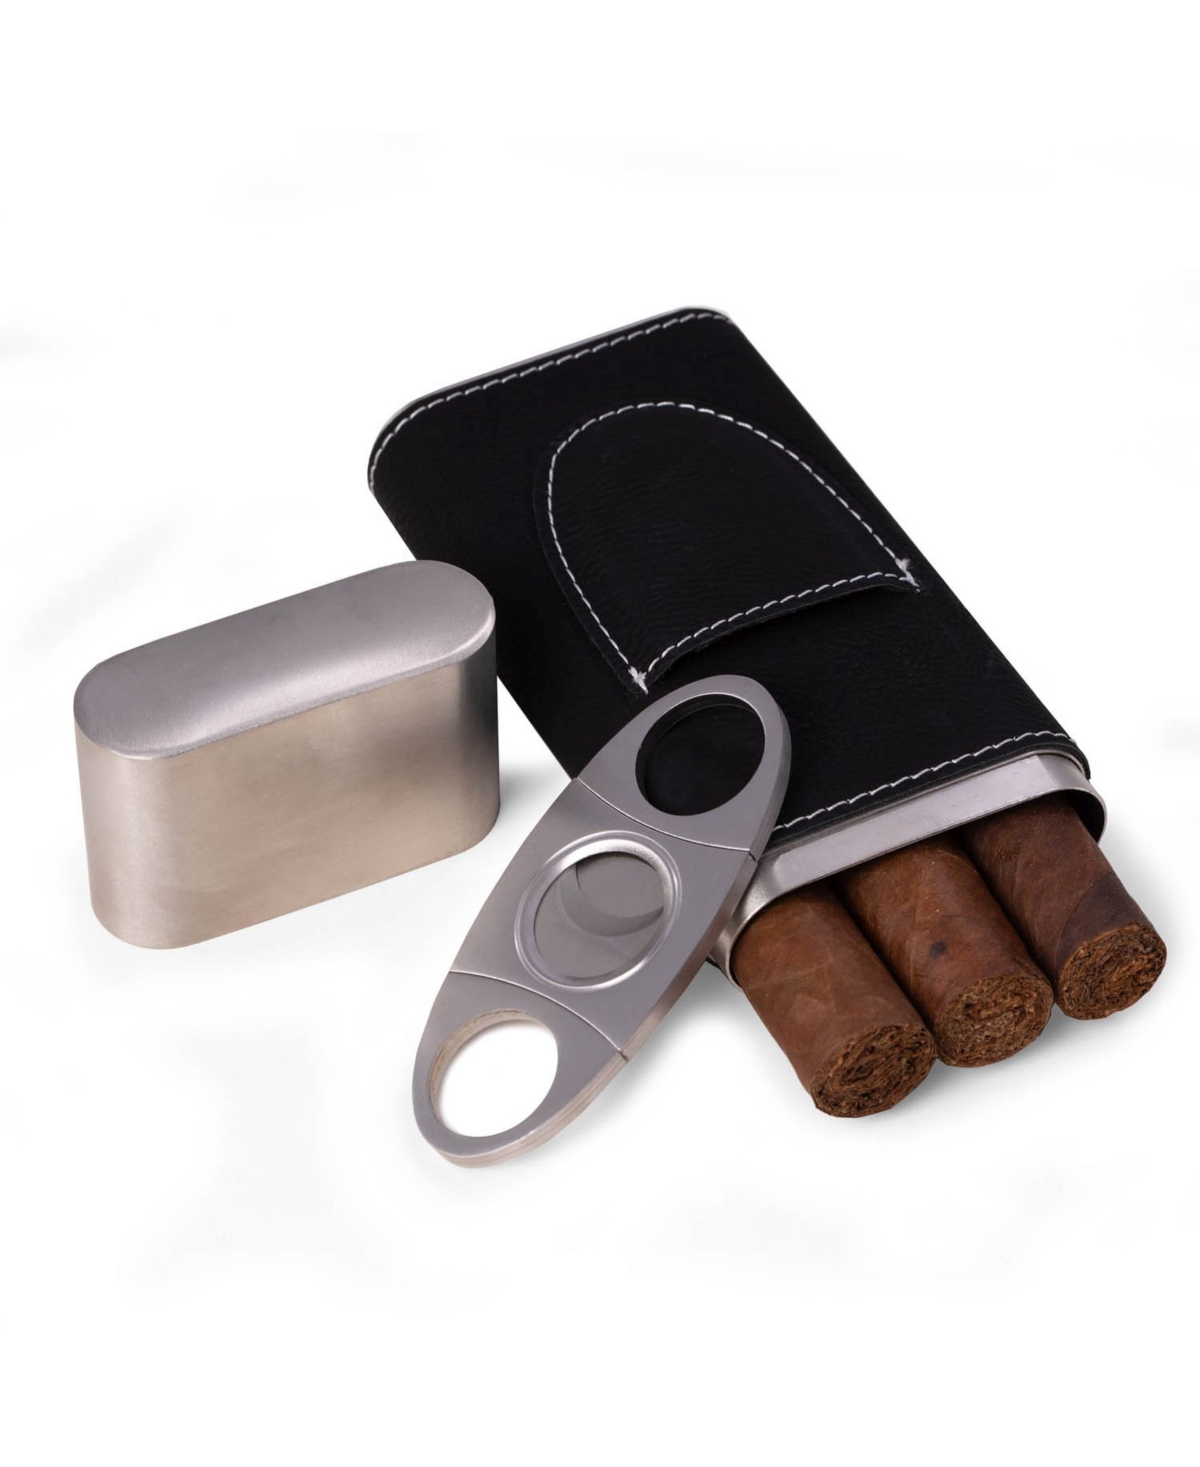 Bey-berk Leather 3 Cigar Case With Cigar Cutter In Multi